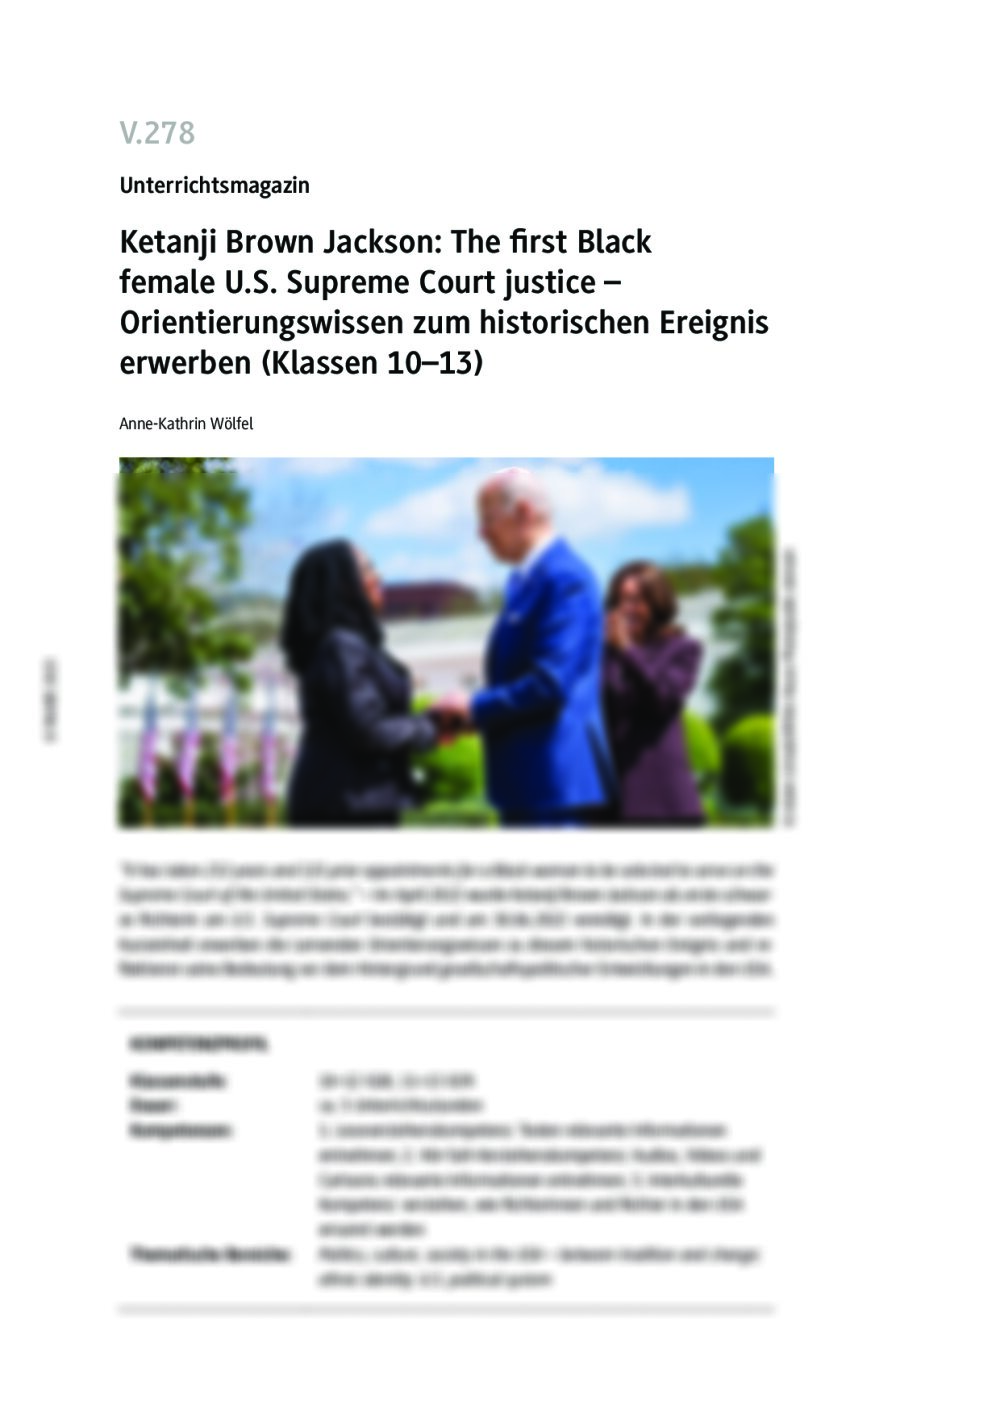 Ketanji Brown Jackson: The first Black female U.S. Supreme Court justice - Seite 1